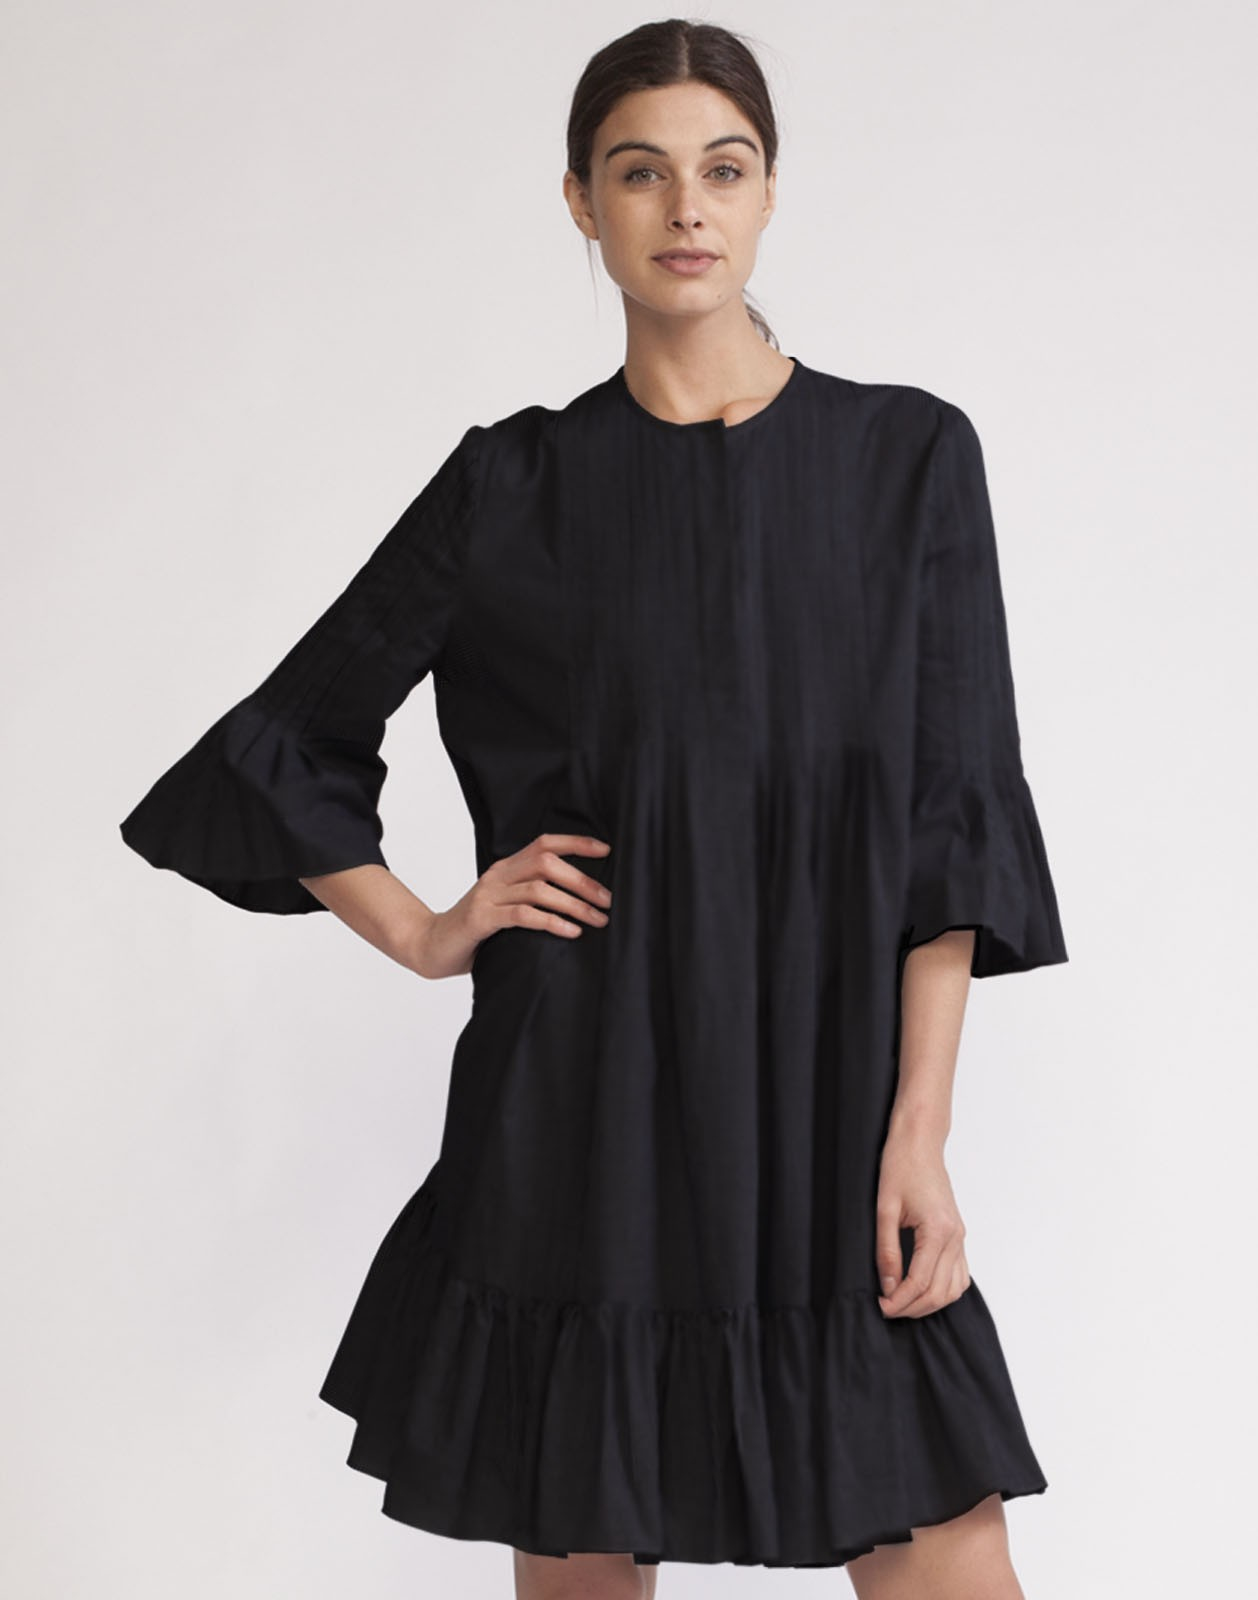 Cynthia Rowley Cotton Pintuck Ruffle Dress in Black - Lyst